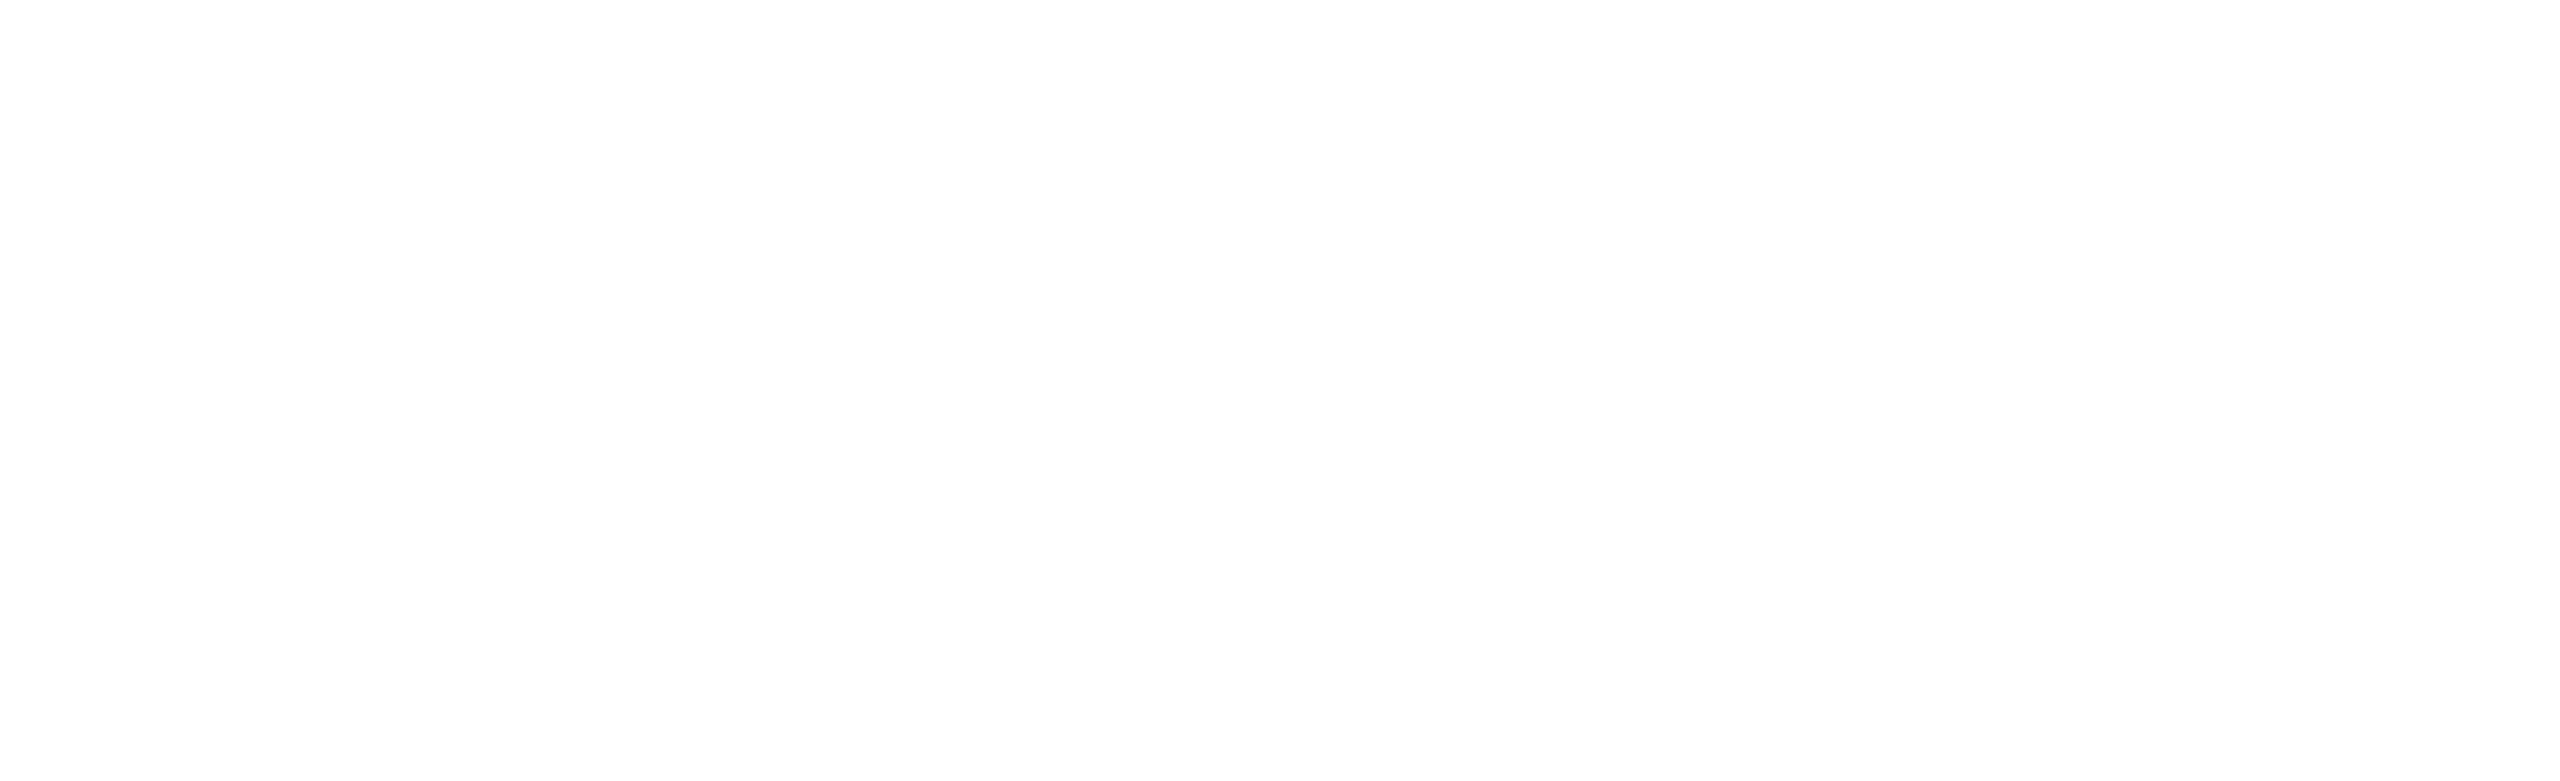 Reset-Client